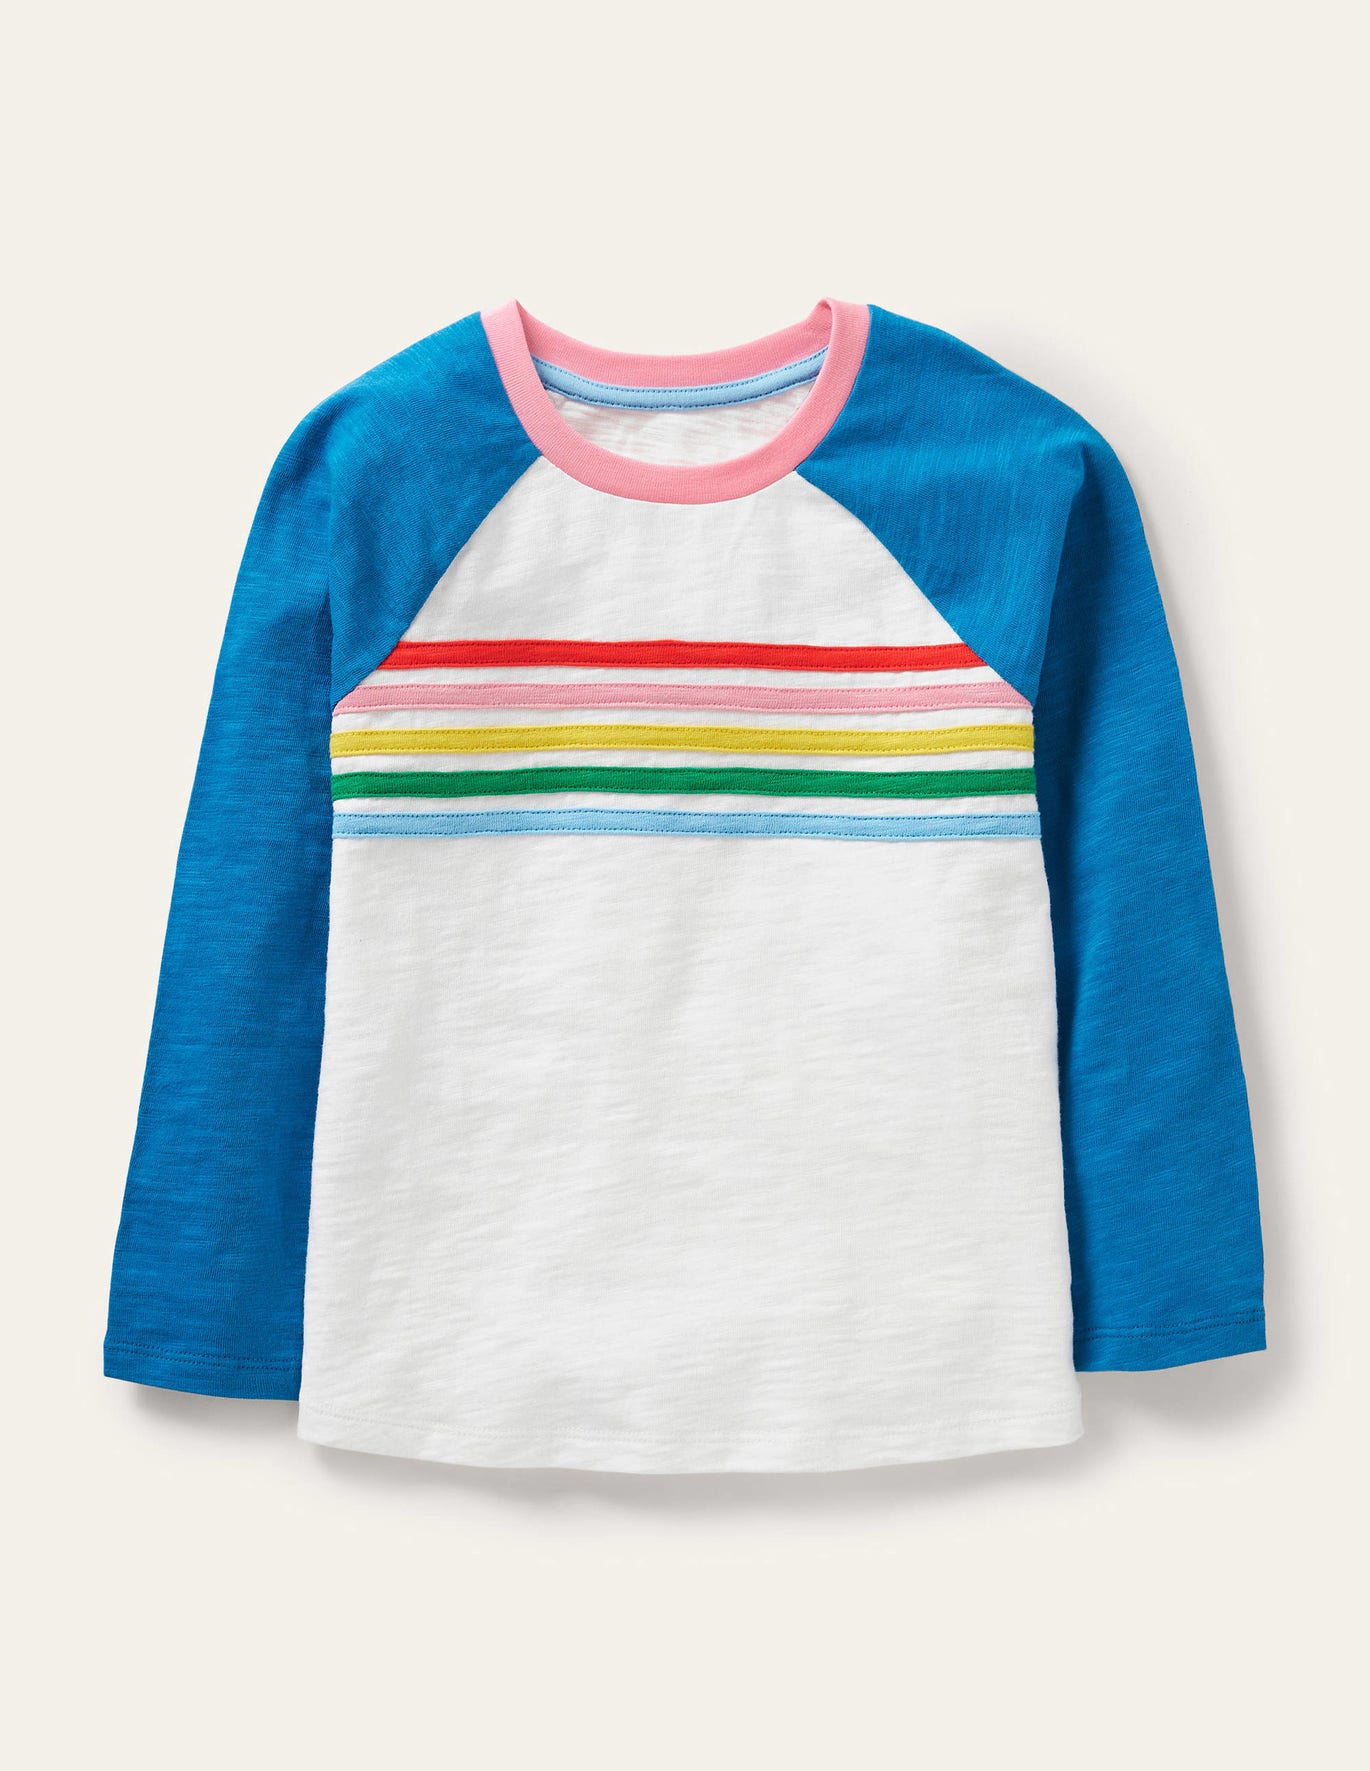 Boden Stripe Slub Raglan T-shirt - Bright Marina Blue Rainbow